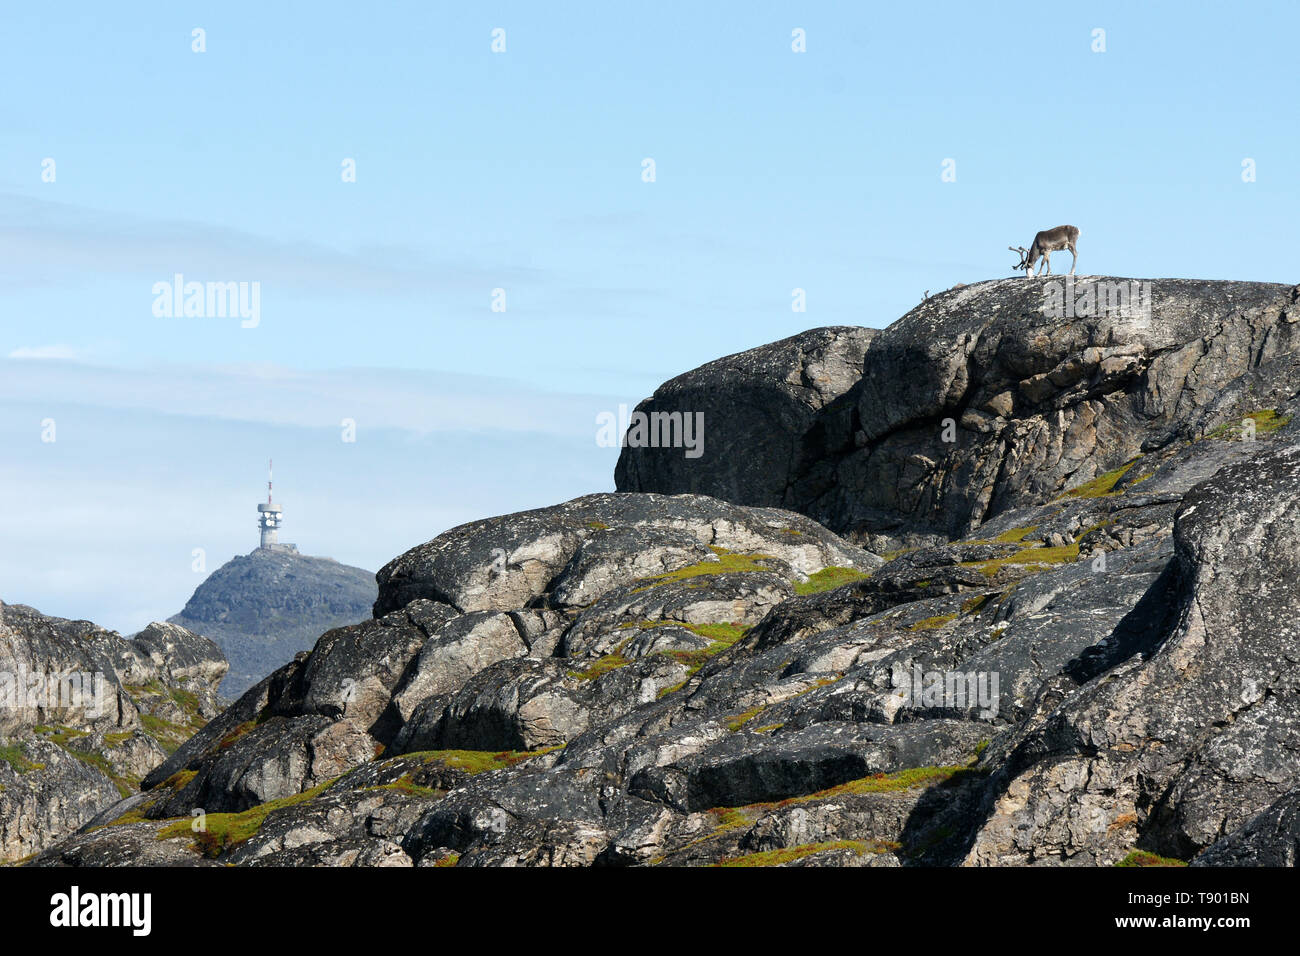 reindeer on a rock in kvaløy norway Stock Photo